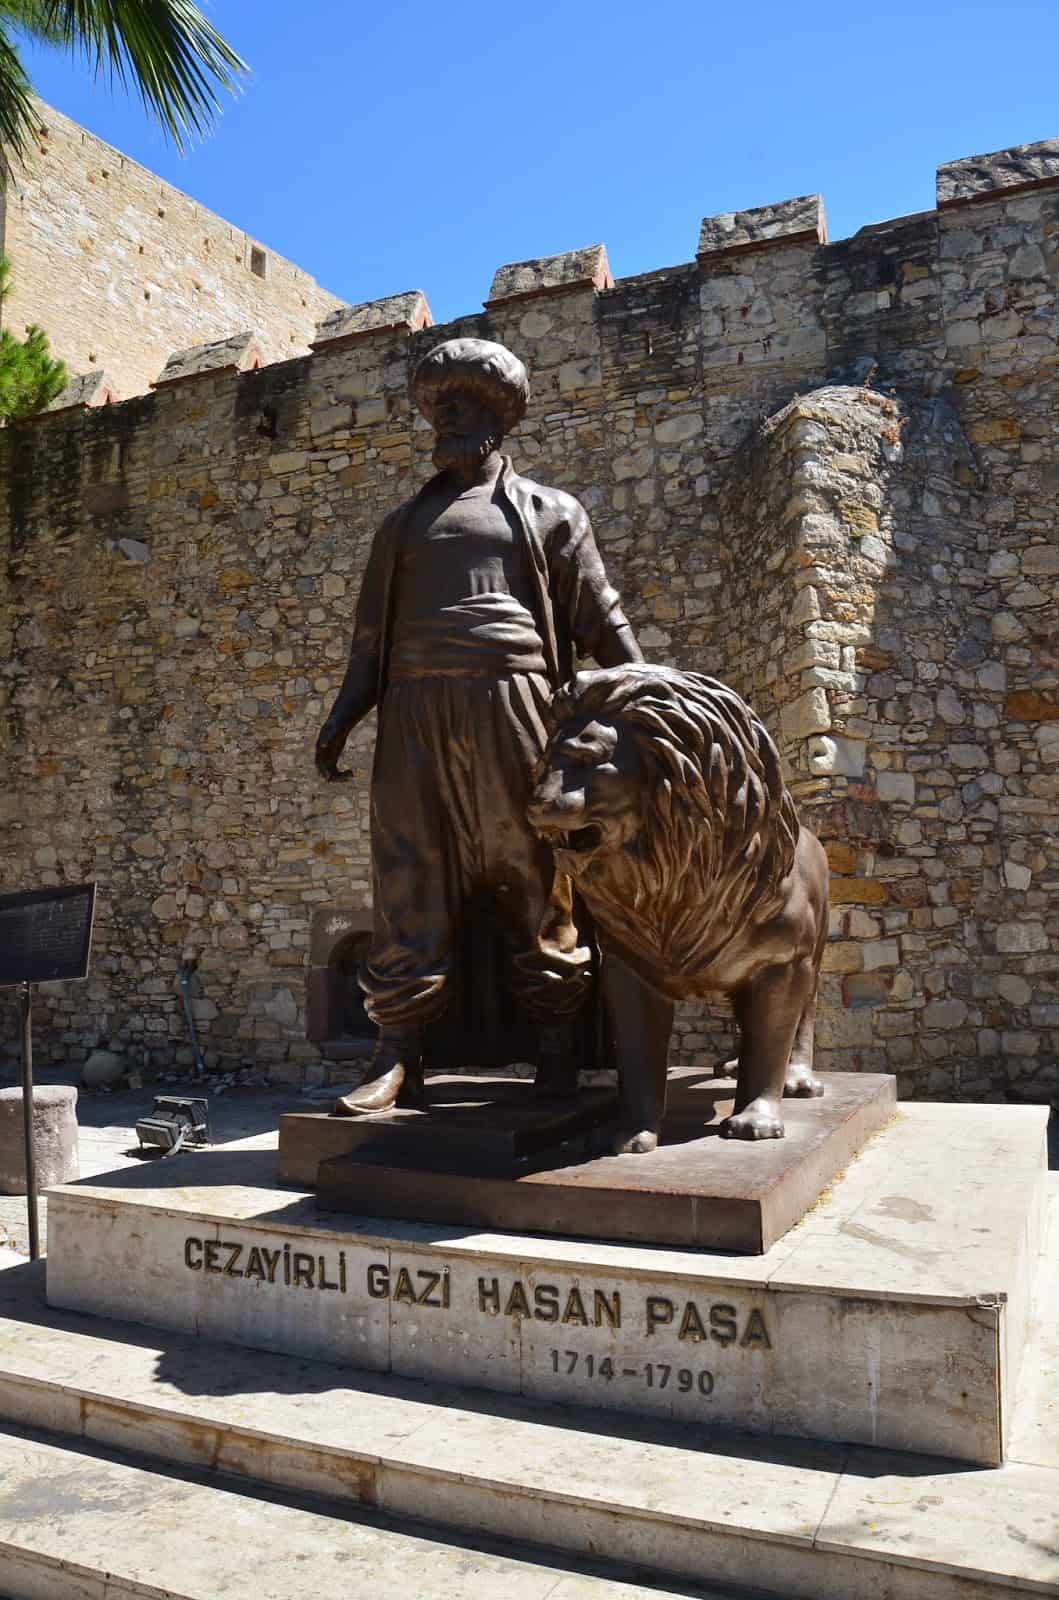 Cezayirli Gazi Hasan Pasha statue at Çeşme Kalesi, Turkey